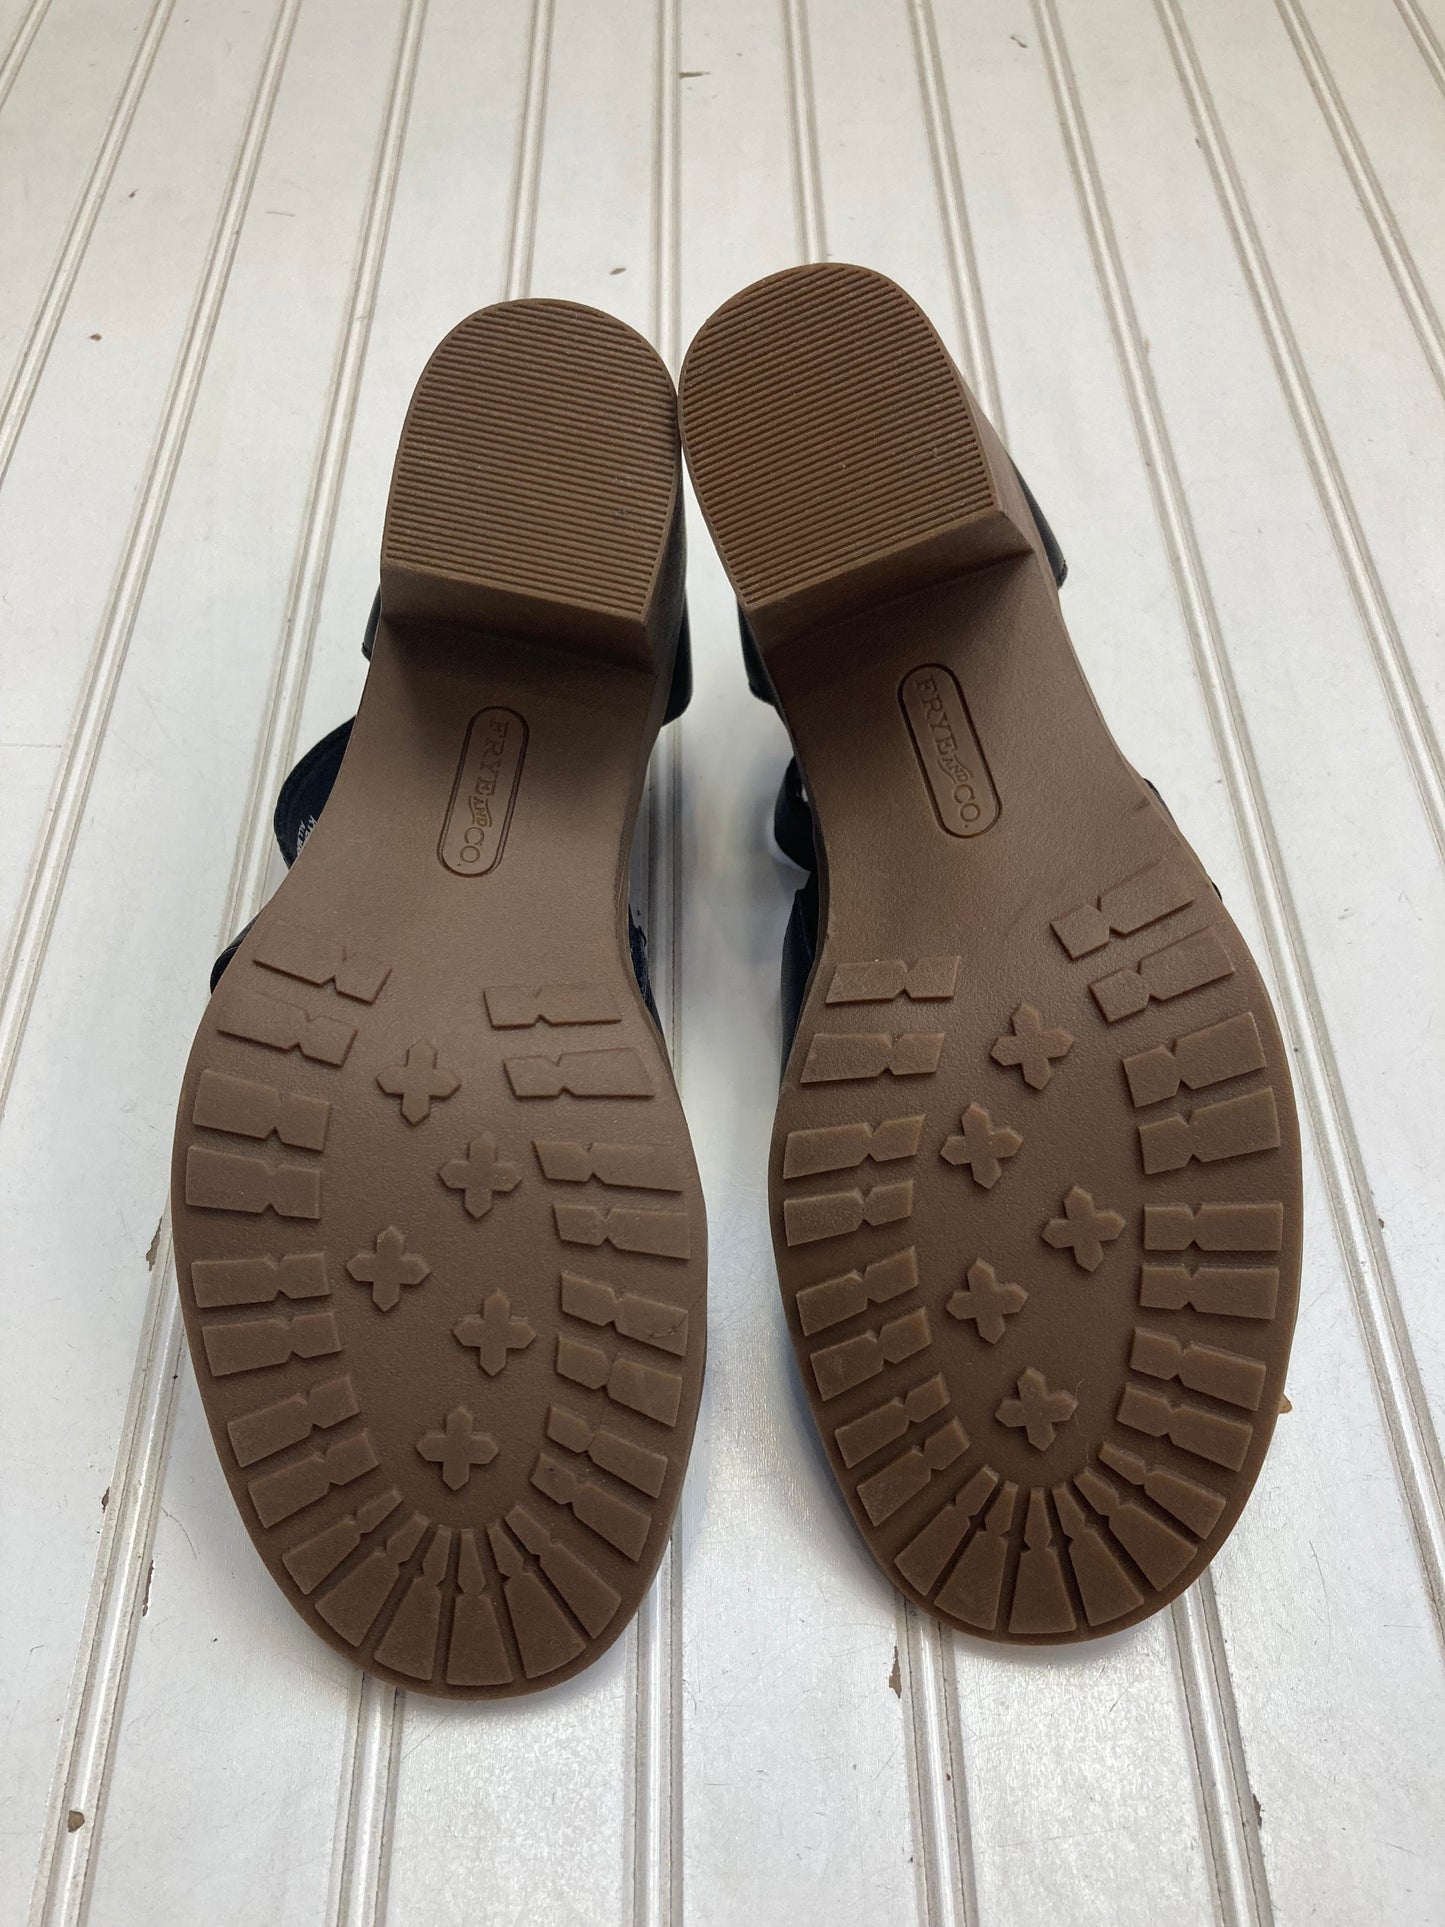 Black & Brown Sandals Heels Block Frye And Co, Size 9.5